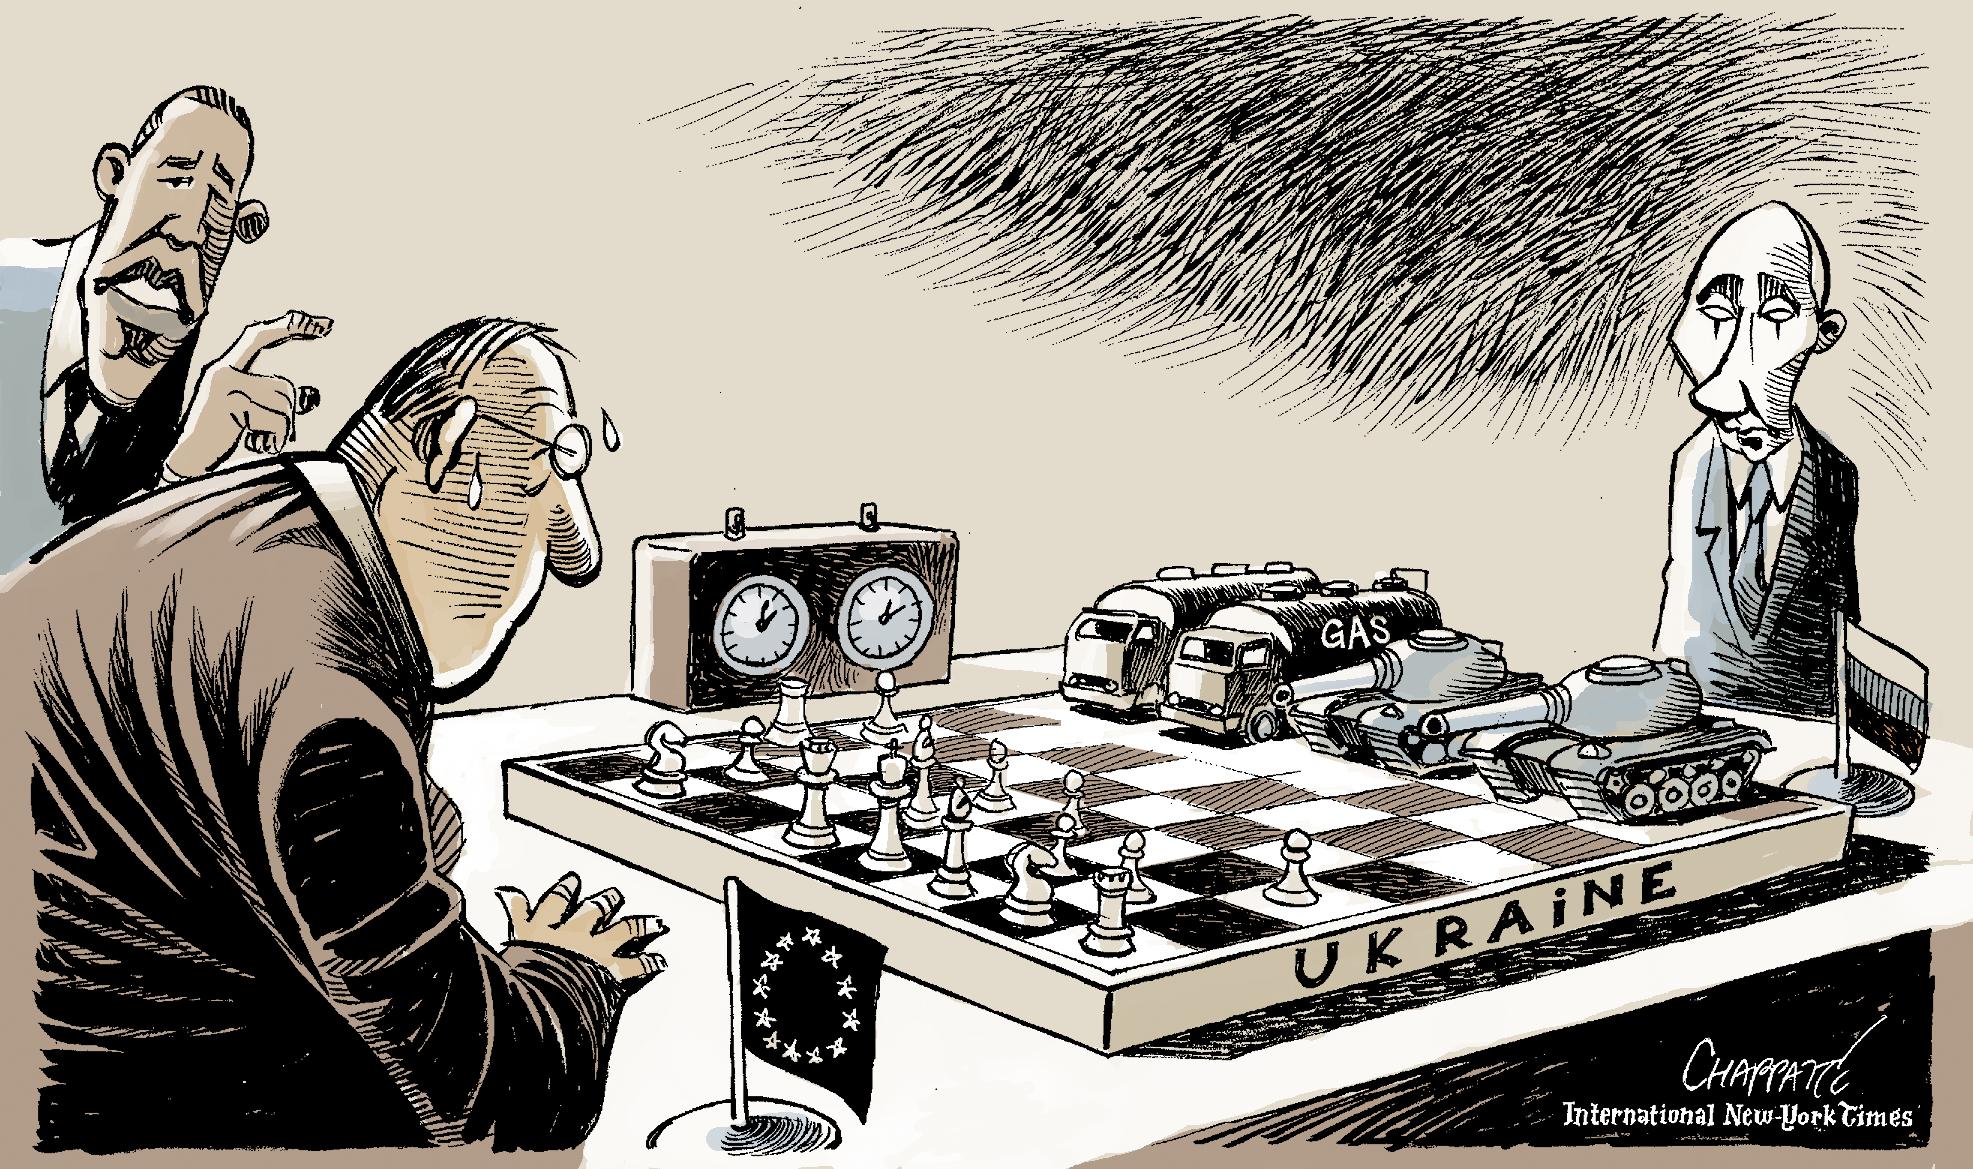 Power play in Ukraine